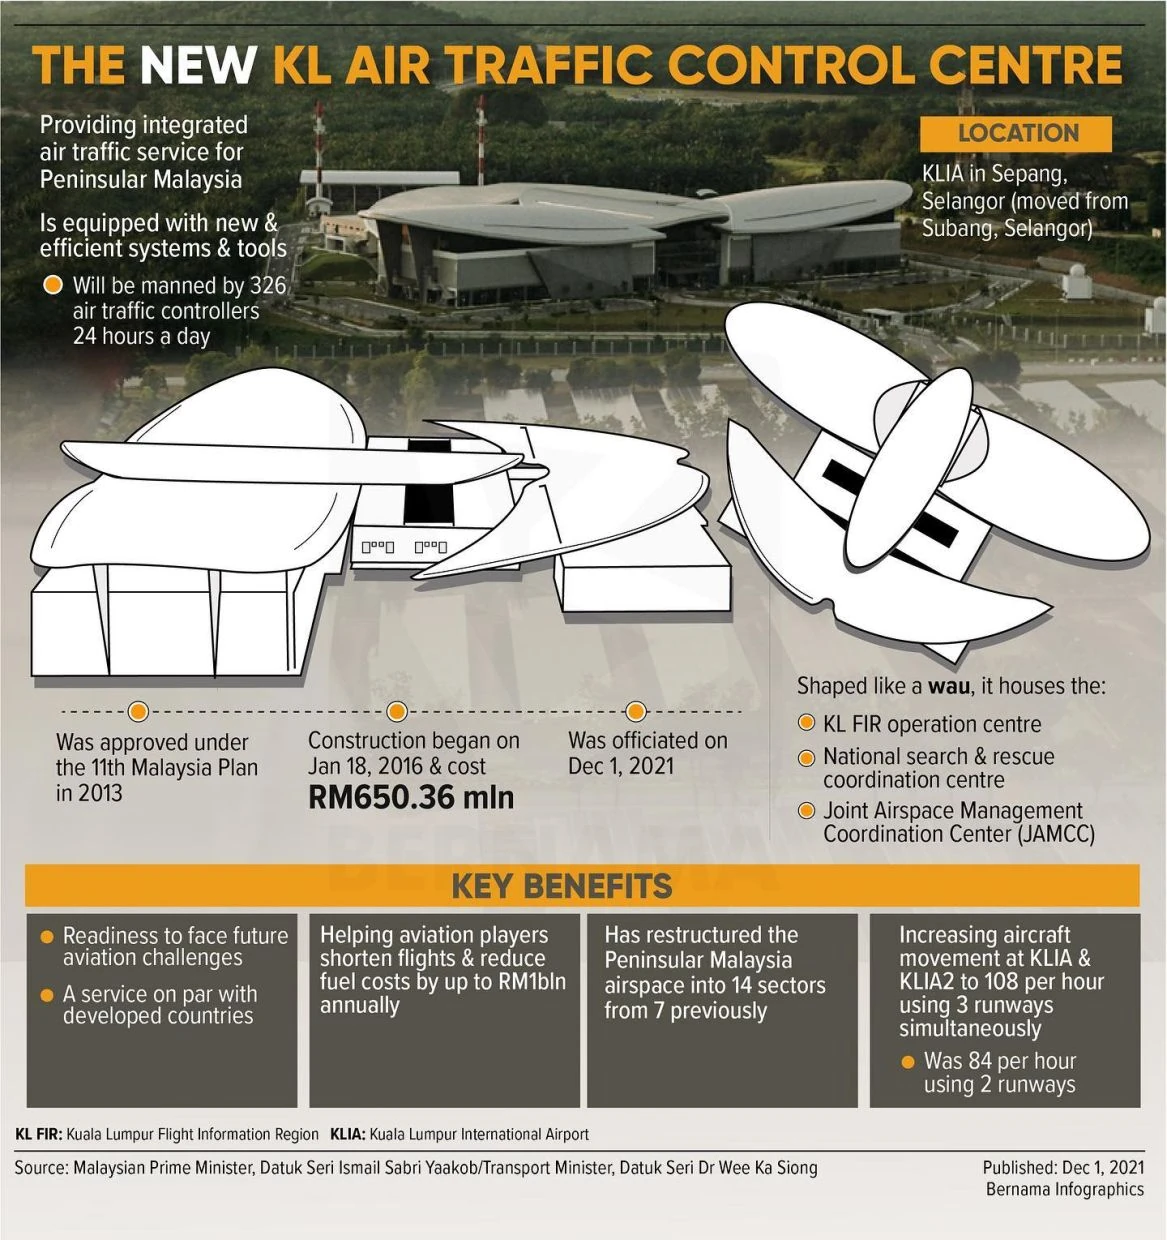 Kuala Lumpur Air Traffic Control Centre (KLATCC)